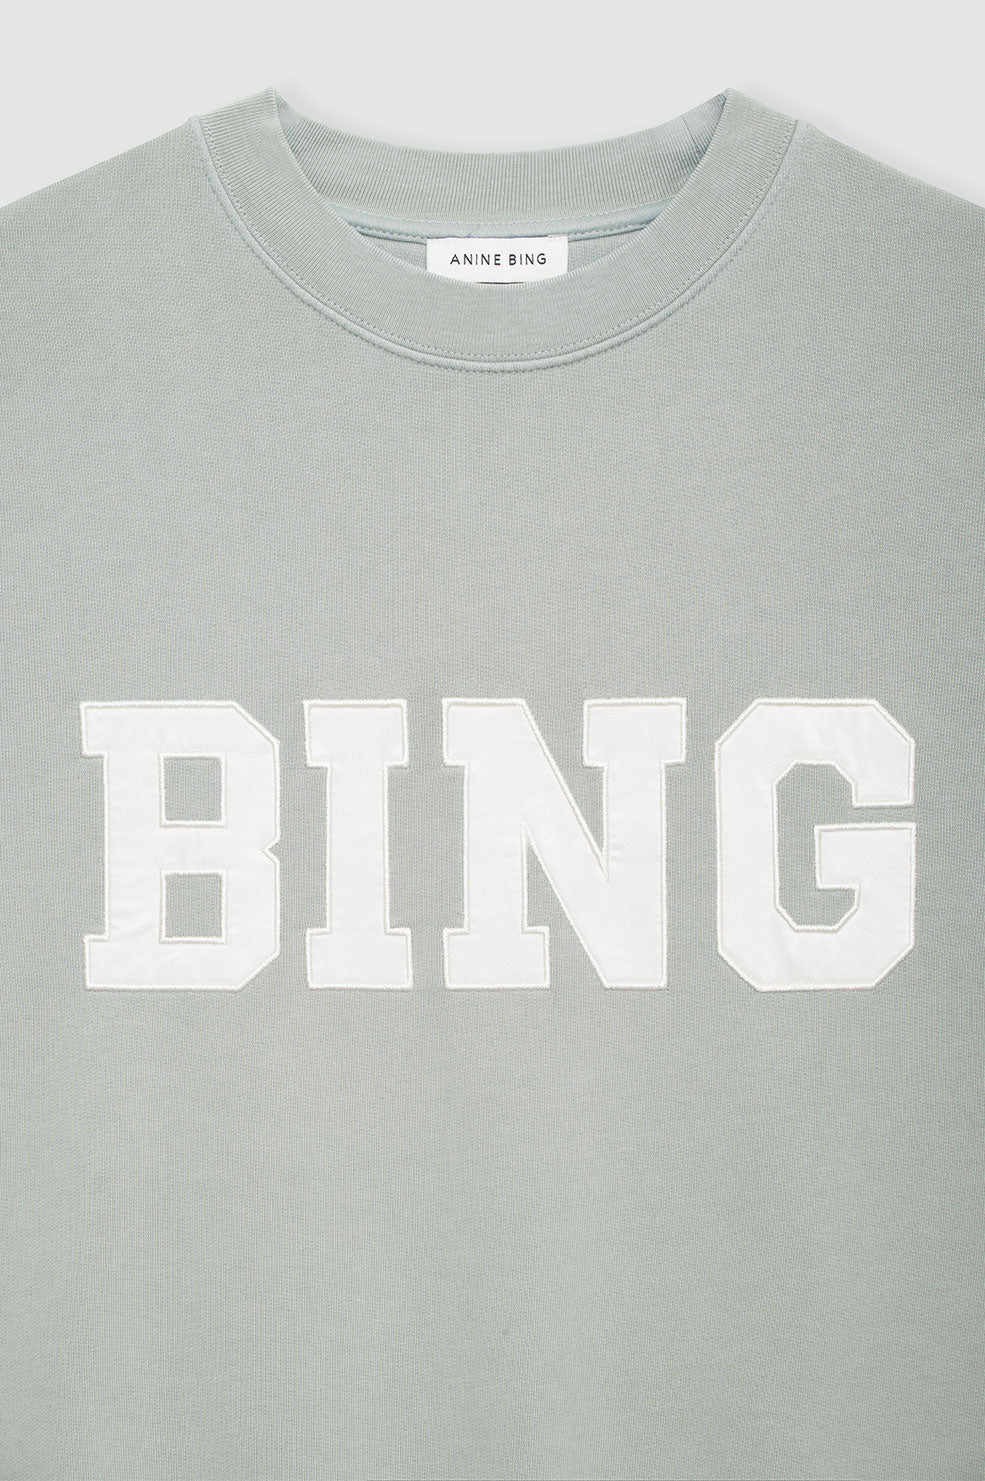 Grey 'Tyler' sweatshirt with logo Anine Bing - Vitkac GB